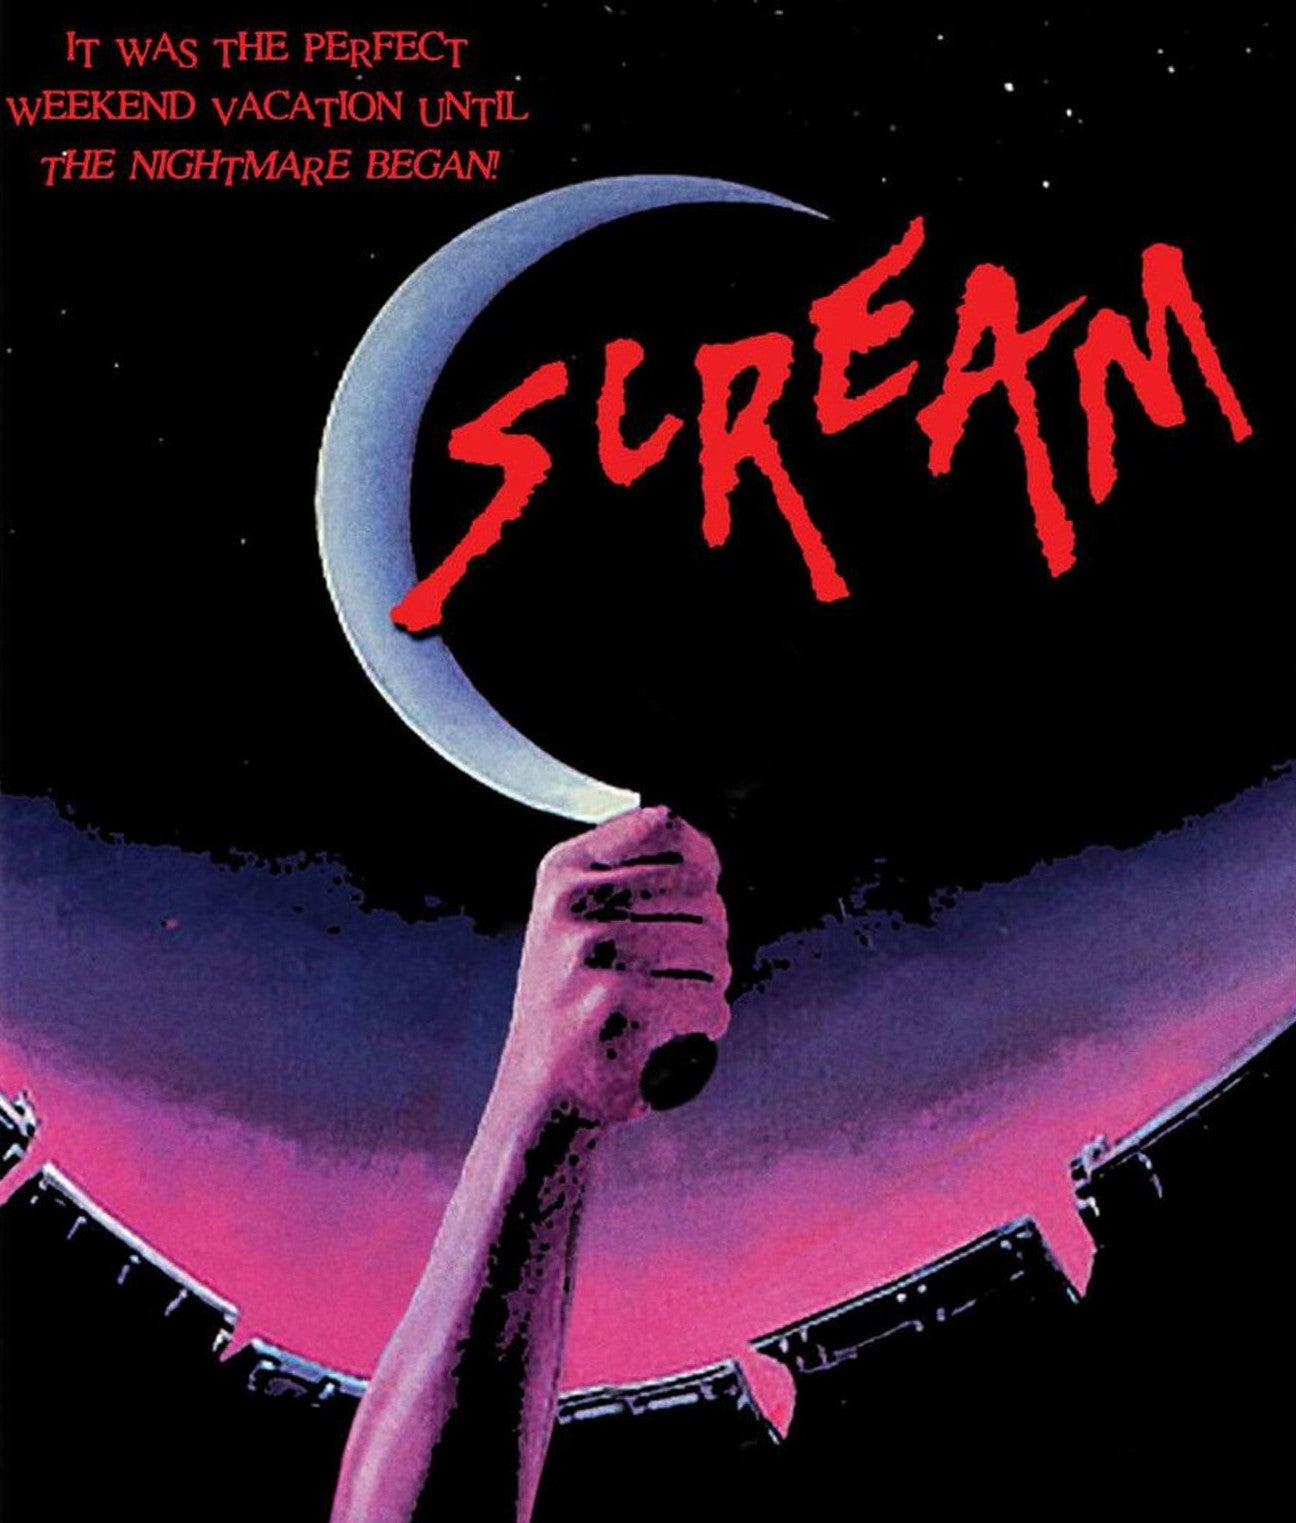 SCREAM (1981) 4K UHD